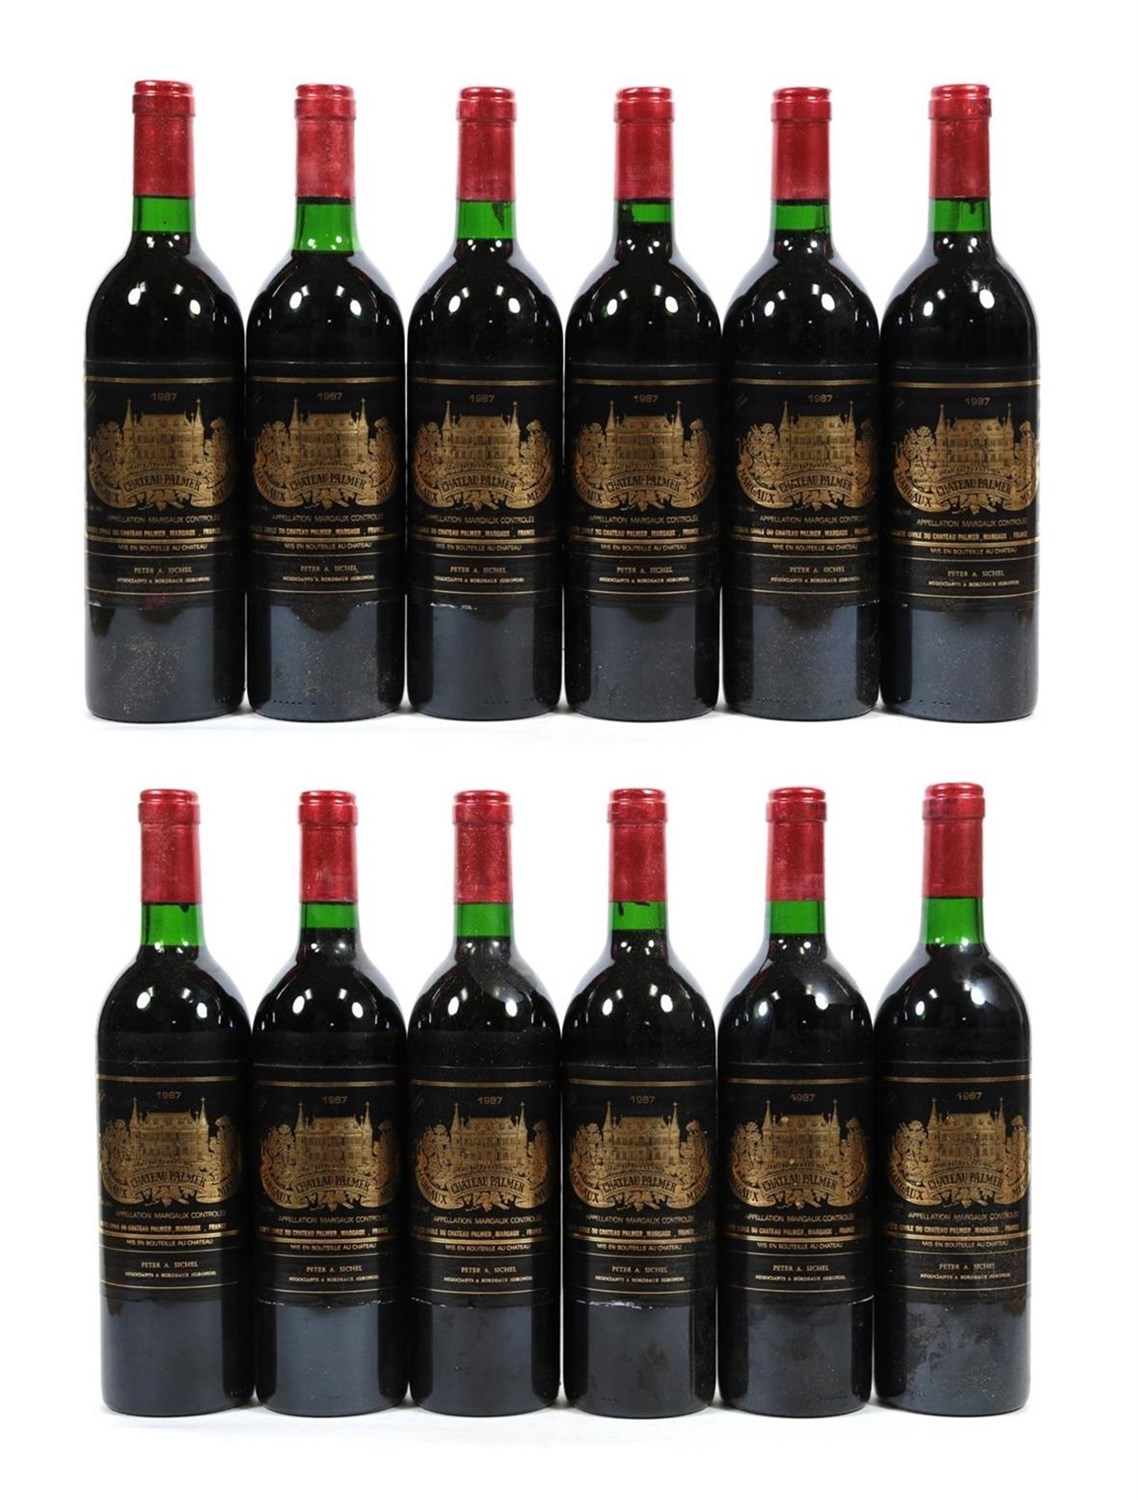 Lot 5022 - Château Palmer 1987 Margaux (twelve bottles)